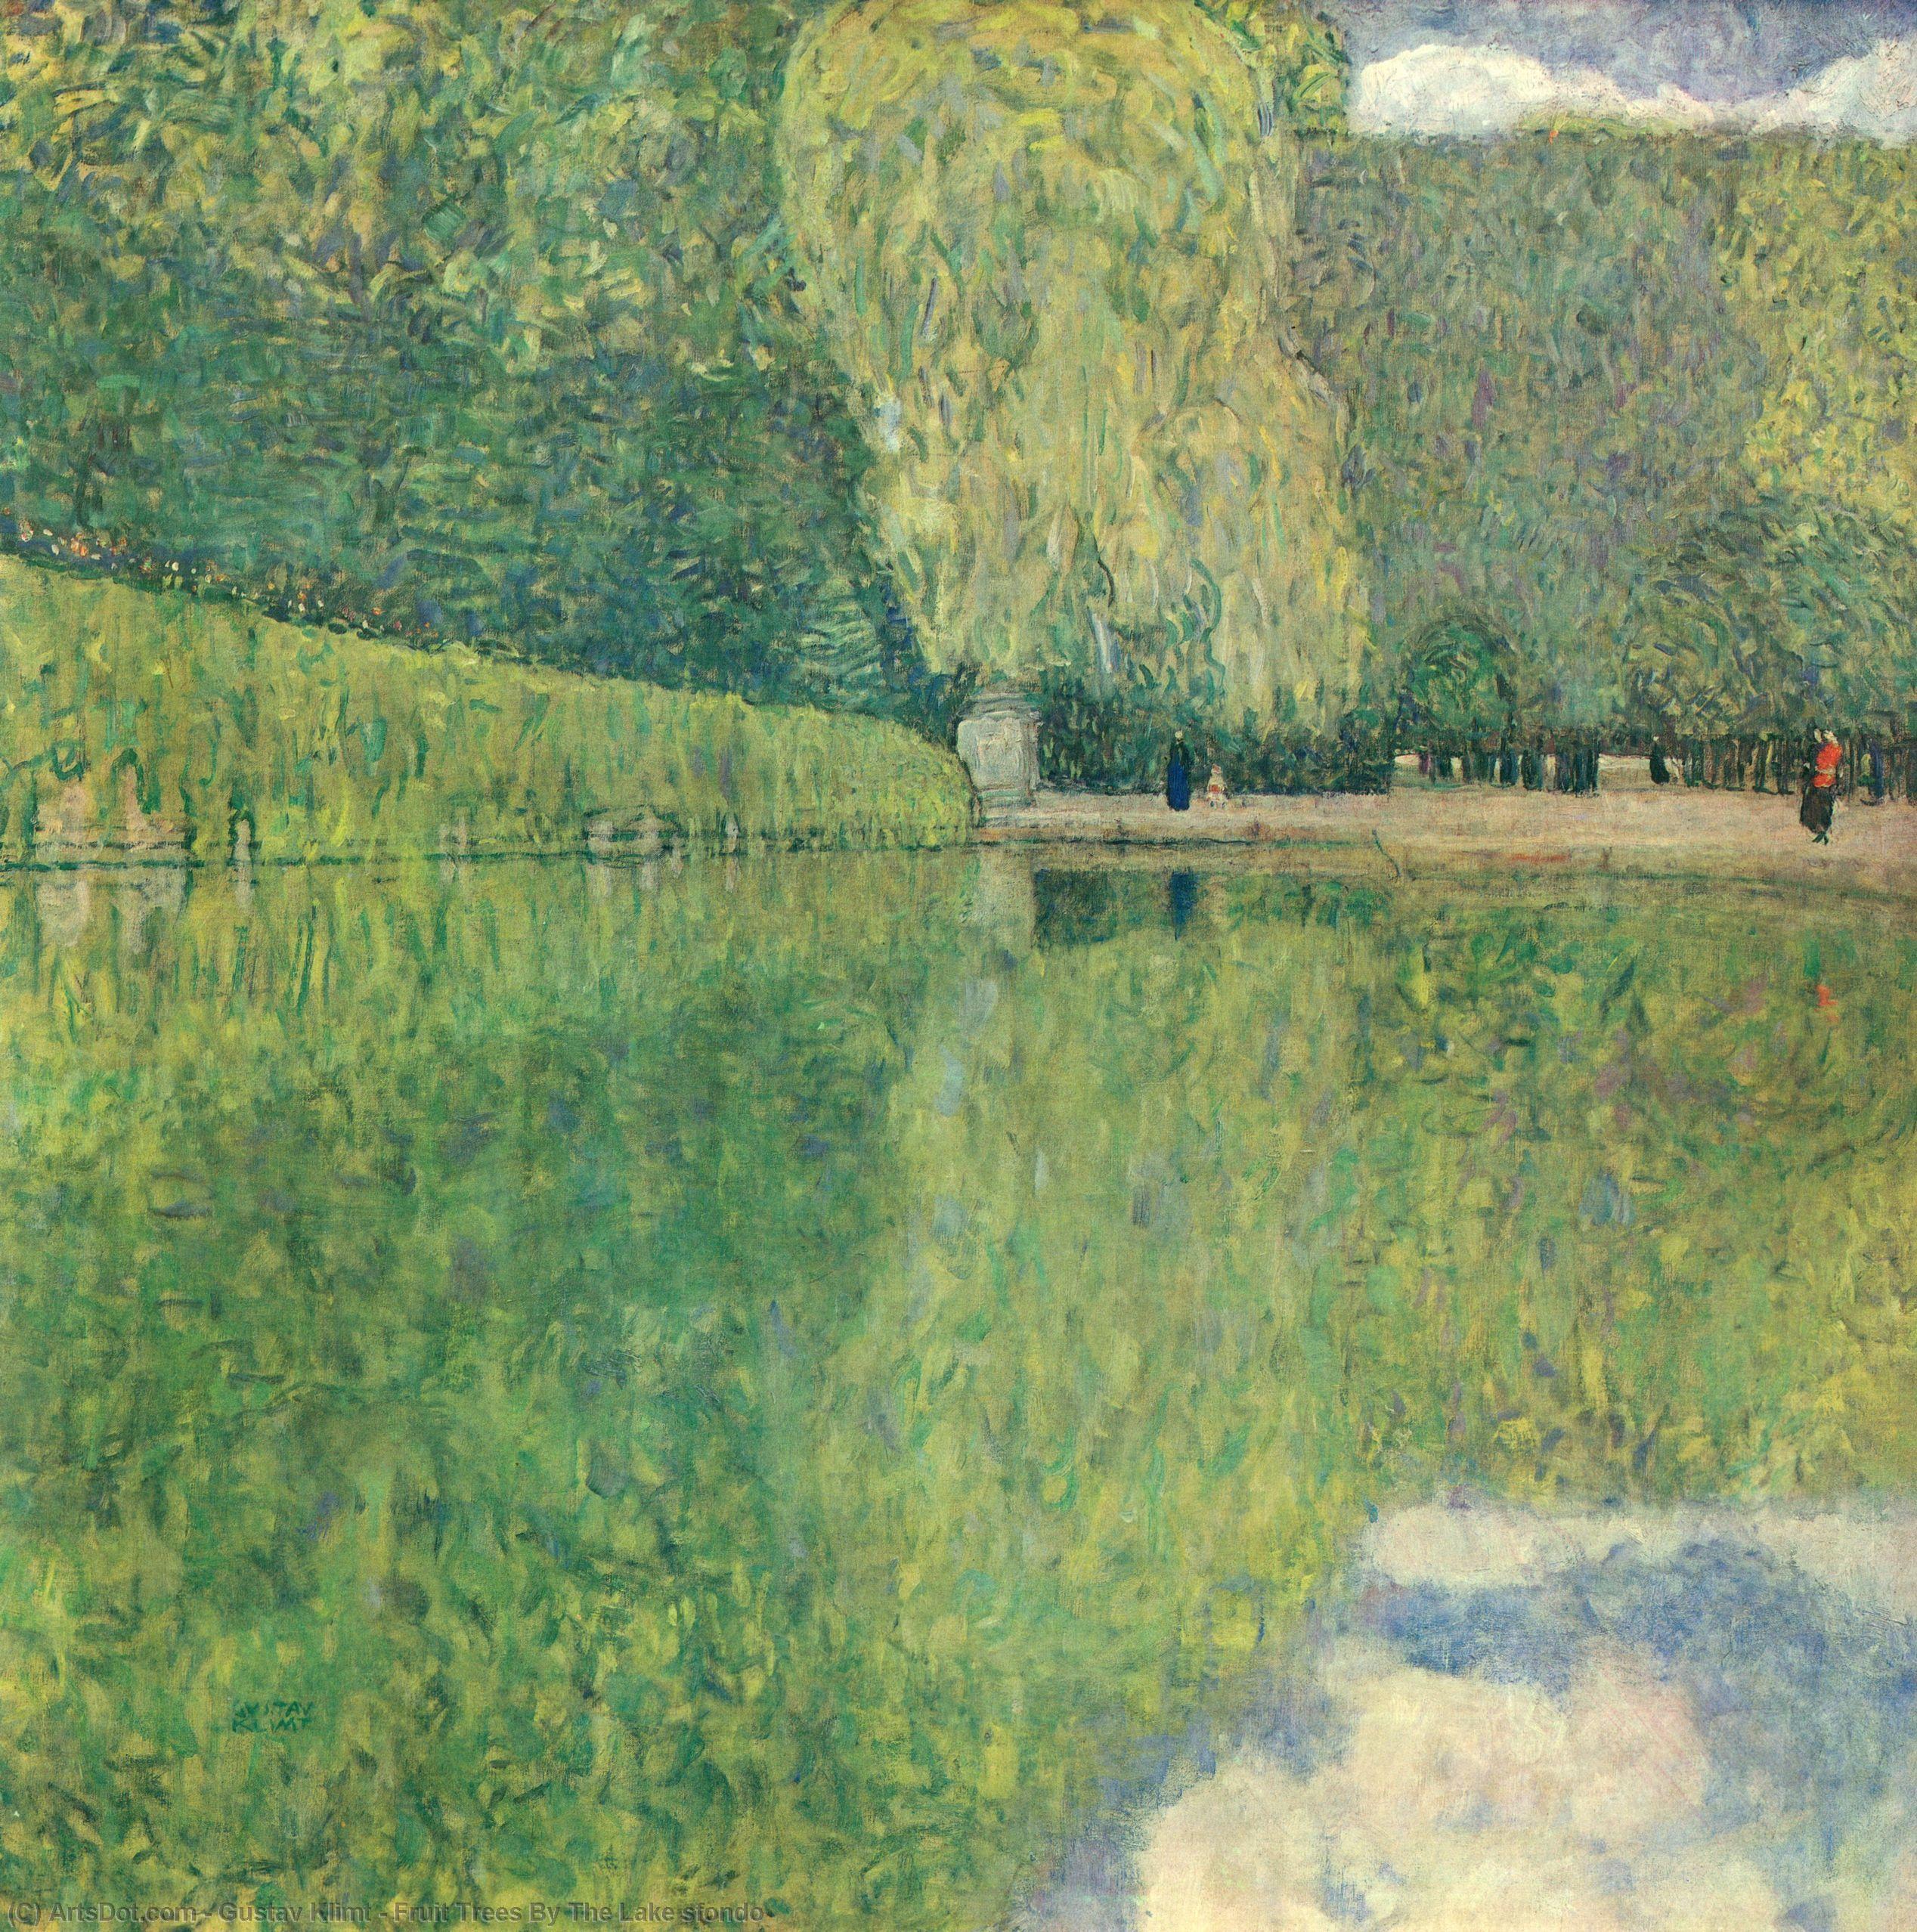 Buy Museum Art Reproductions Fruit Trees By The Lake sfondo by Gustav Klimt | ArtsDot.com